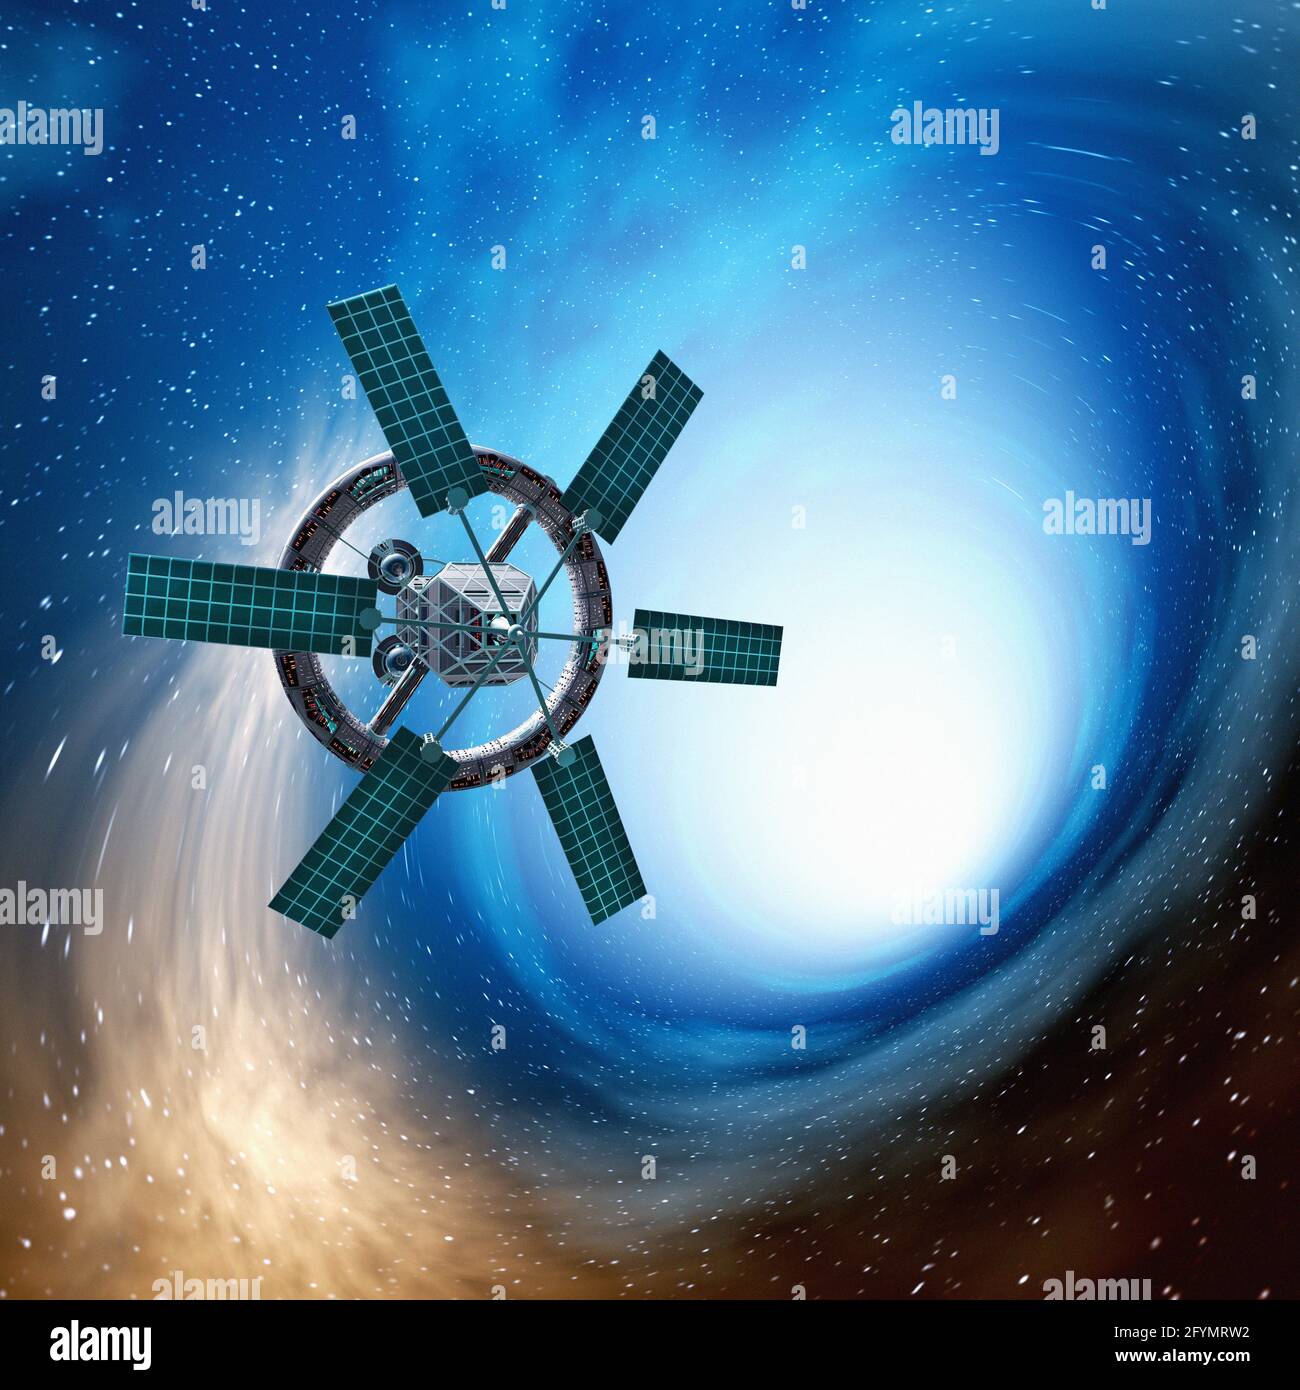 Space probe, illustration Stock Photo